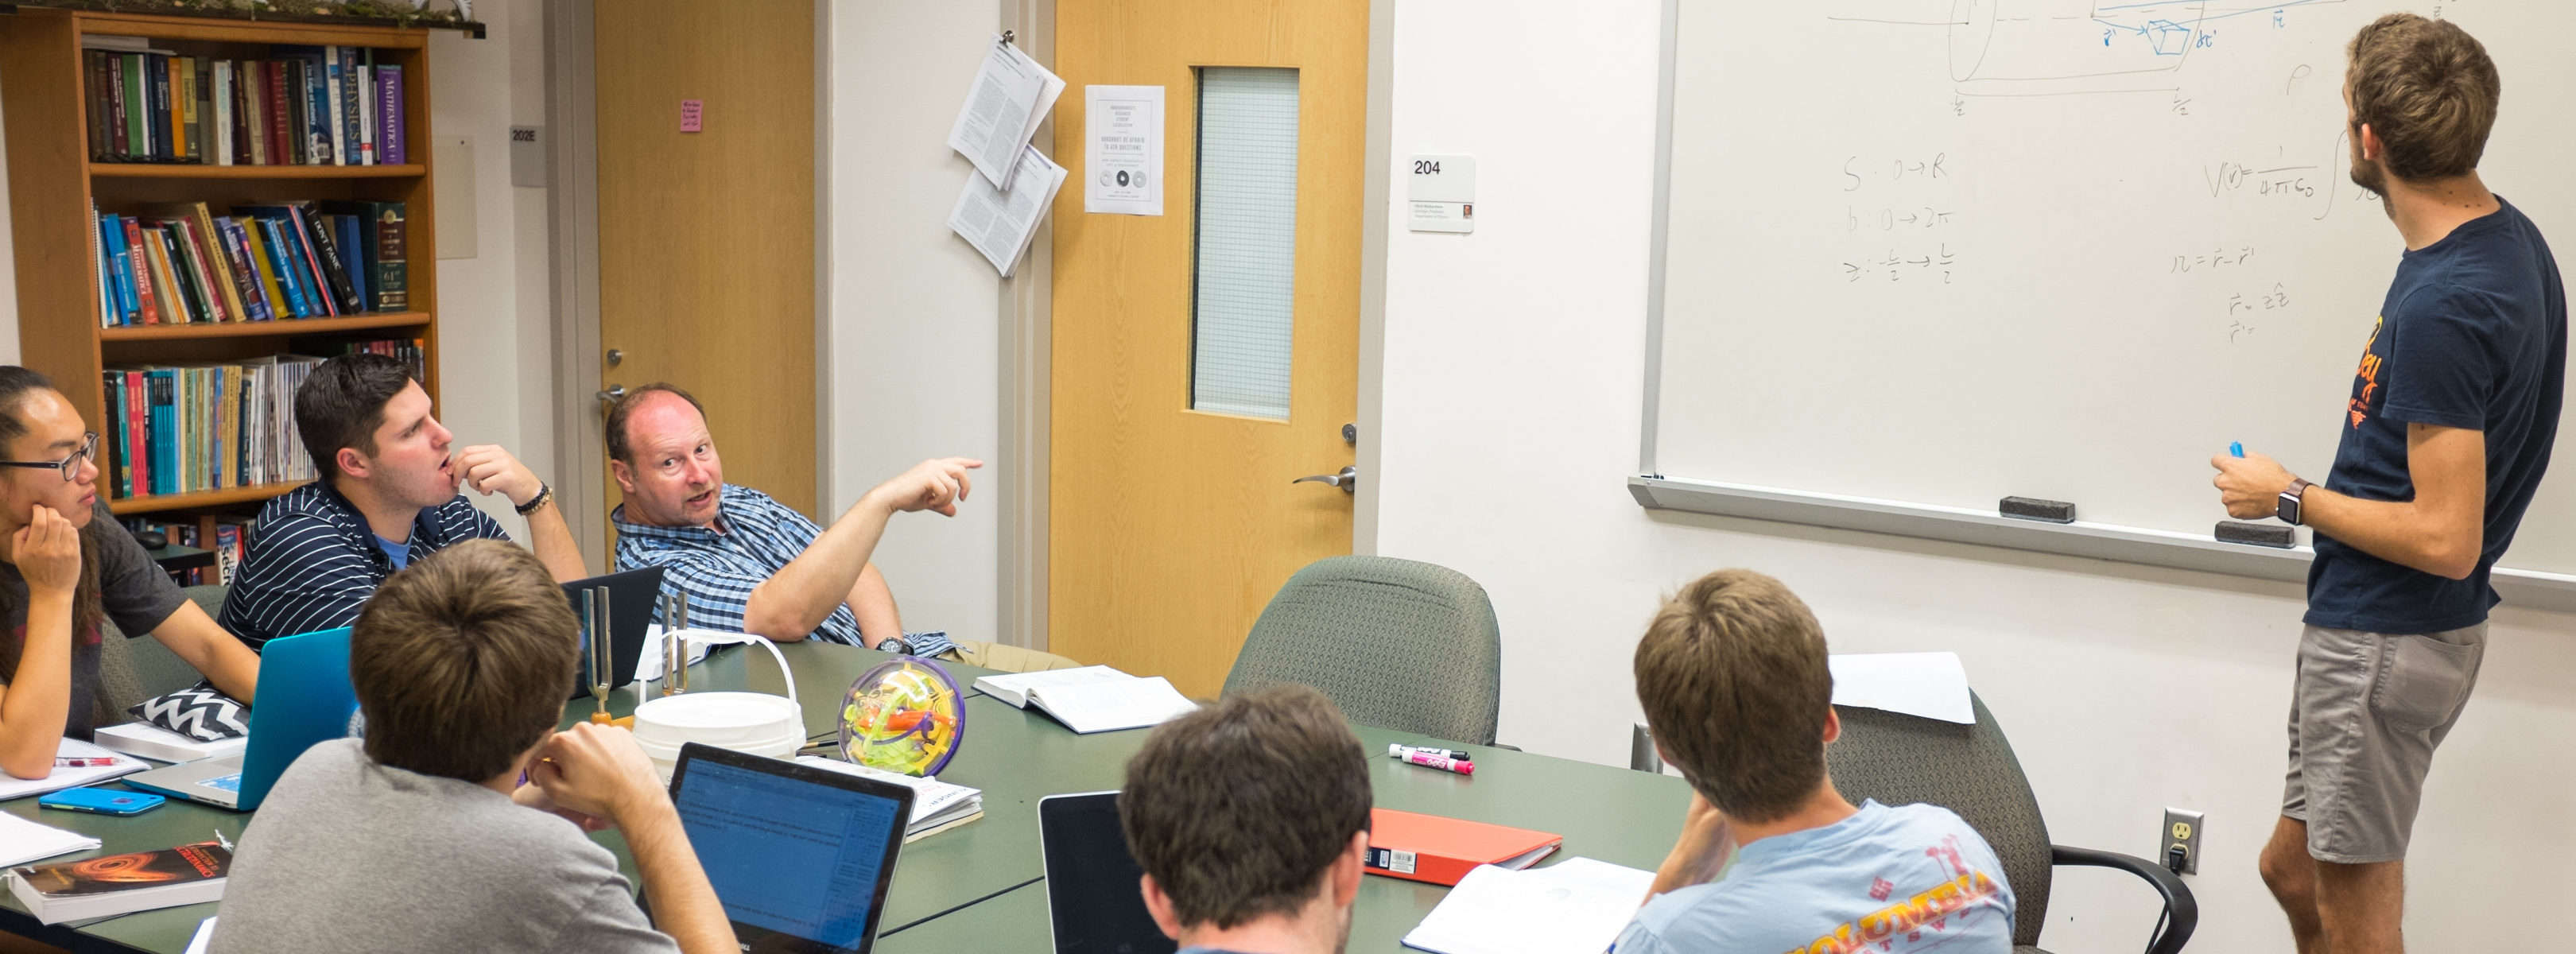 Associate Professor of Physics Martin Kamela teaches physics in a classroom.